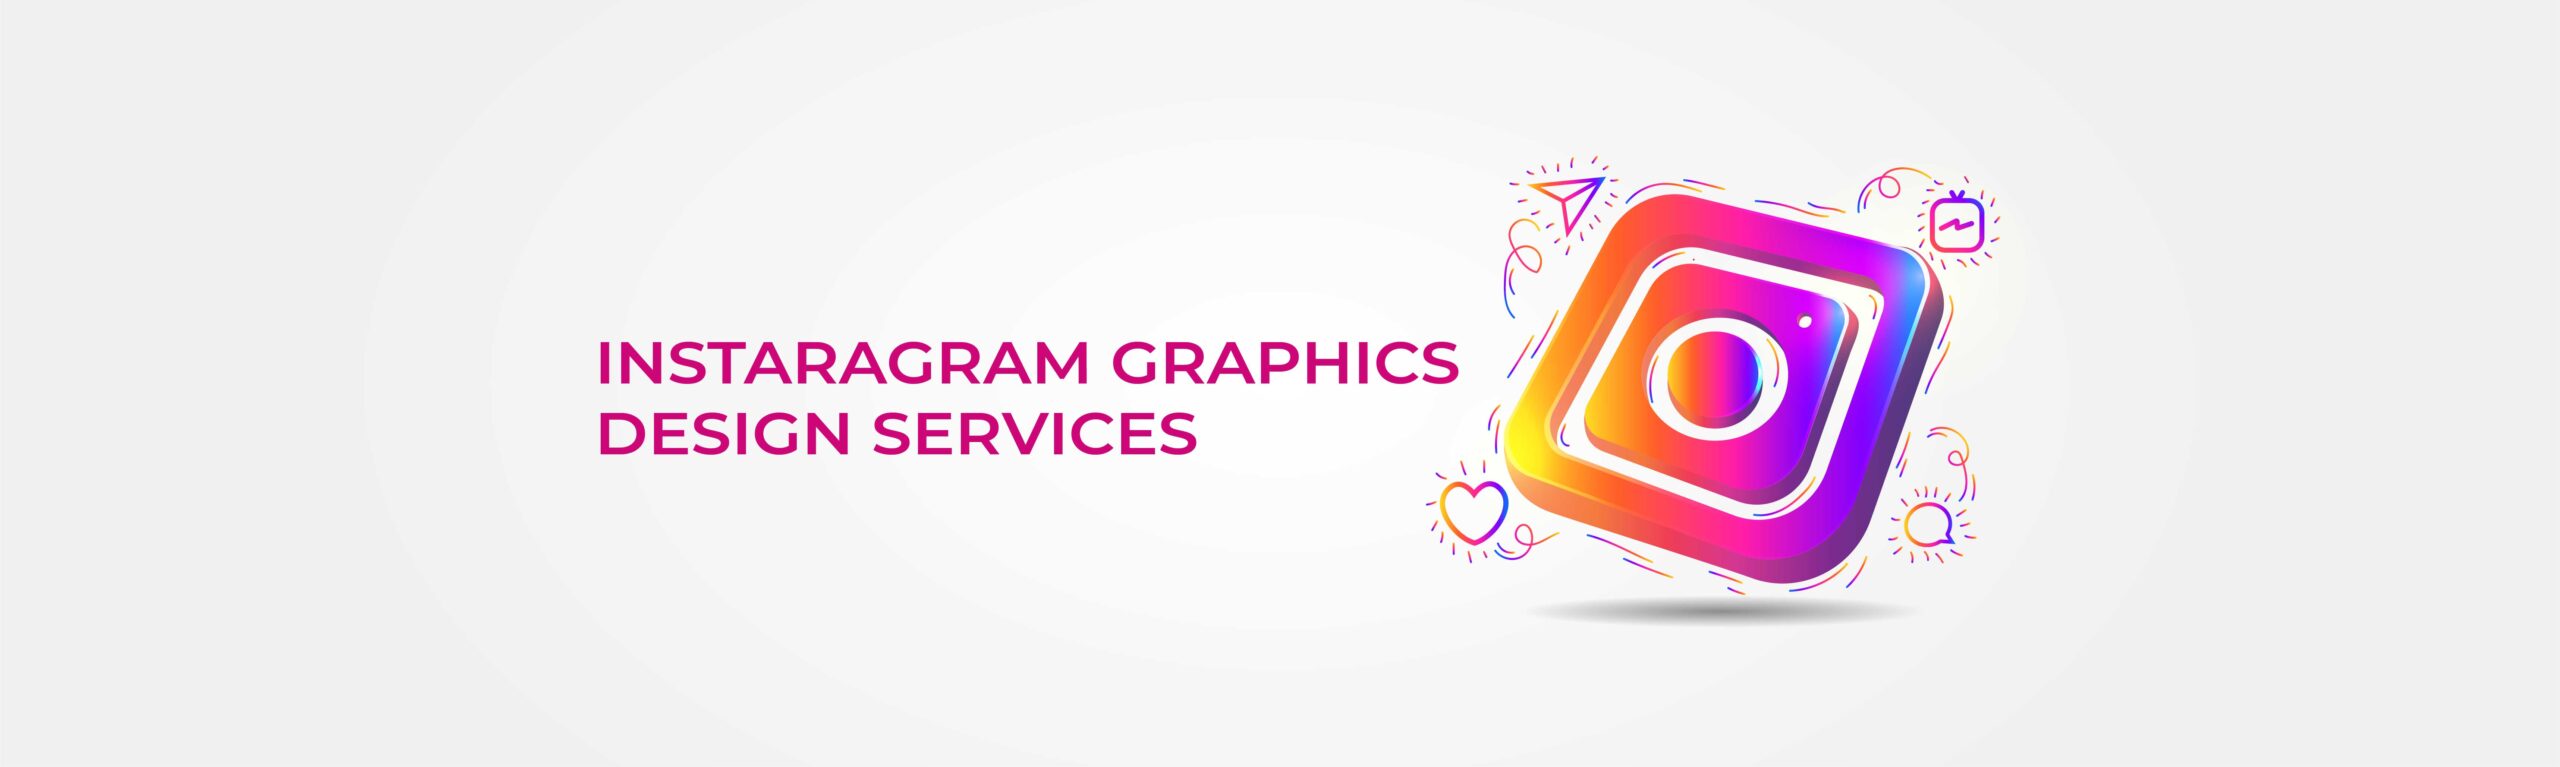 instragram graphics services